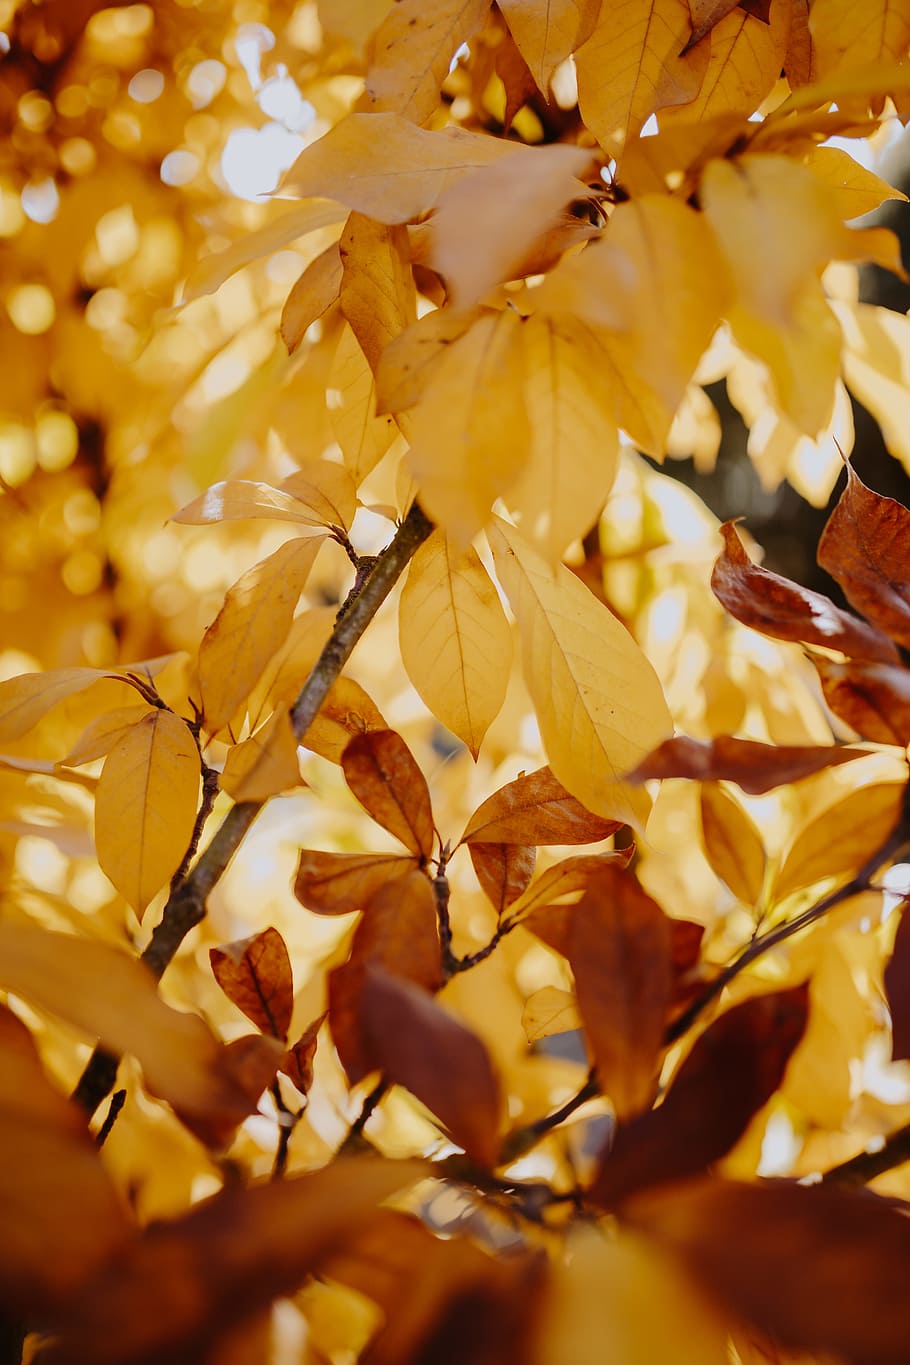 kuning, daun, magnolia, musim gugur, oranye, alam, bagian tanaman, tanaman, close-up, perubahan